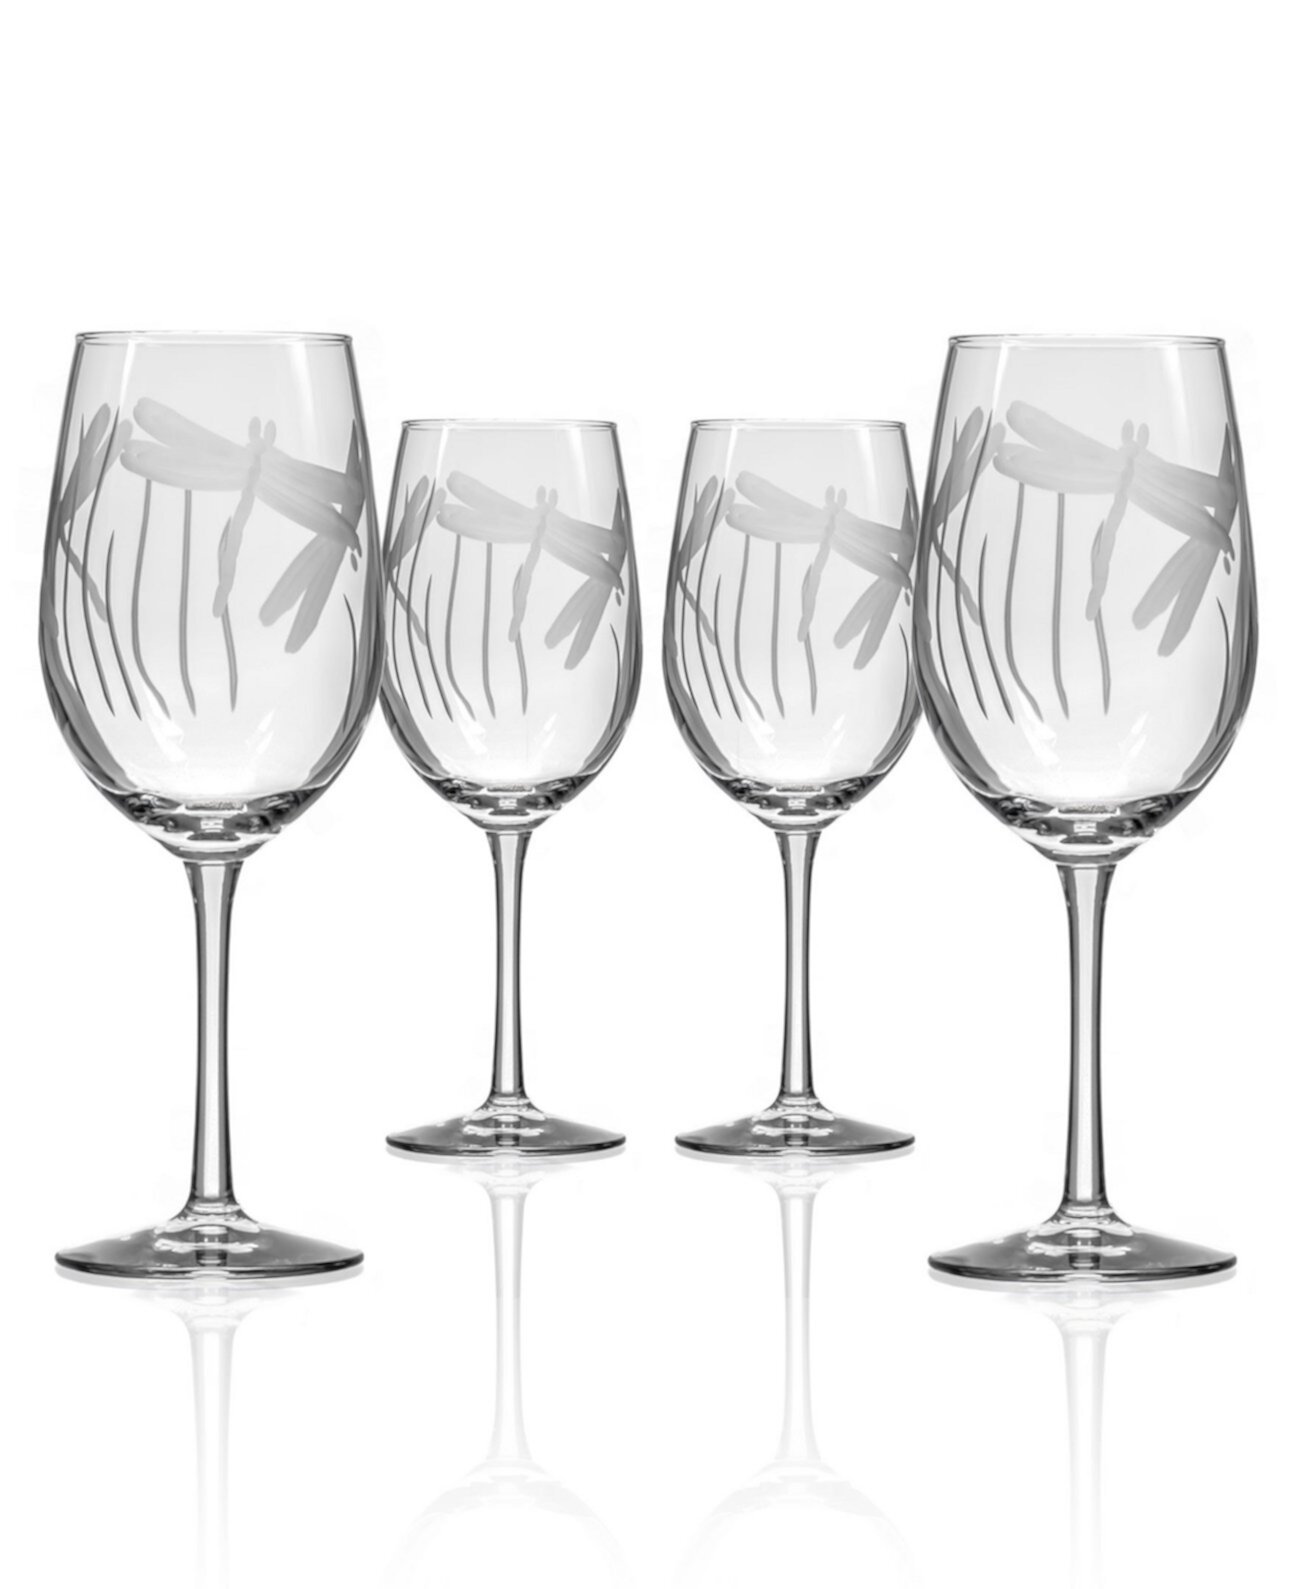 Бокал для белого вина Dragonfly 12 унций - набор из 4 бокалов Rolf Glass